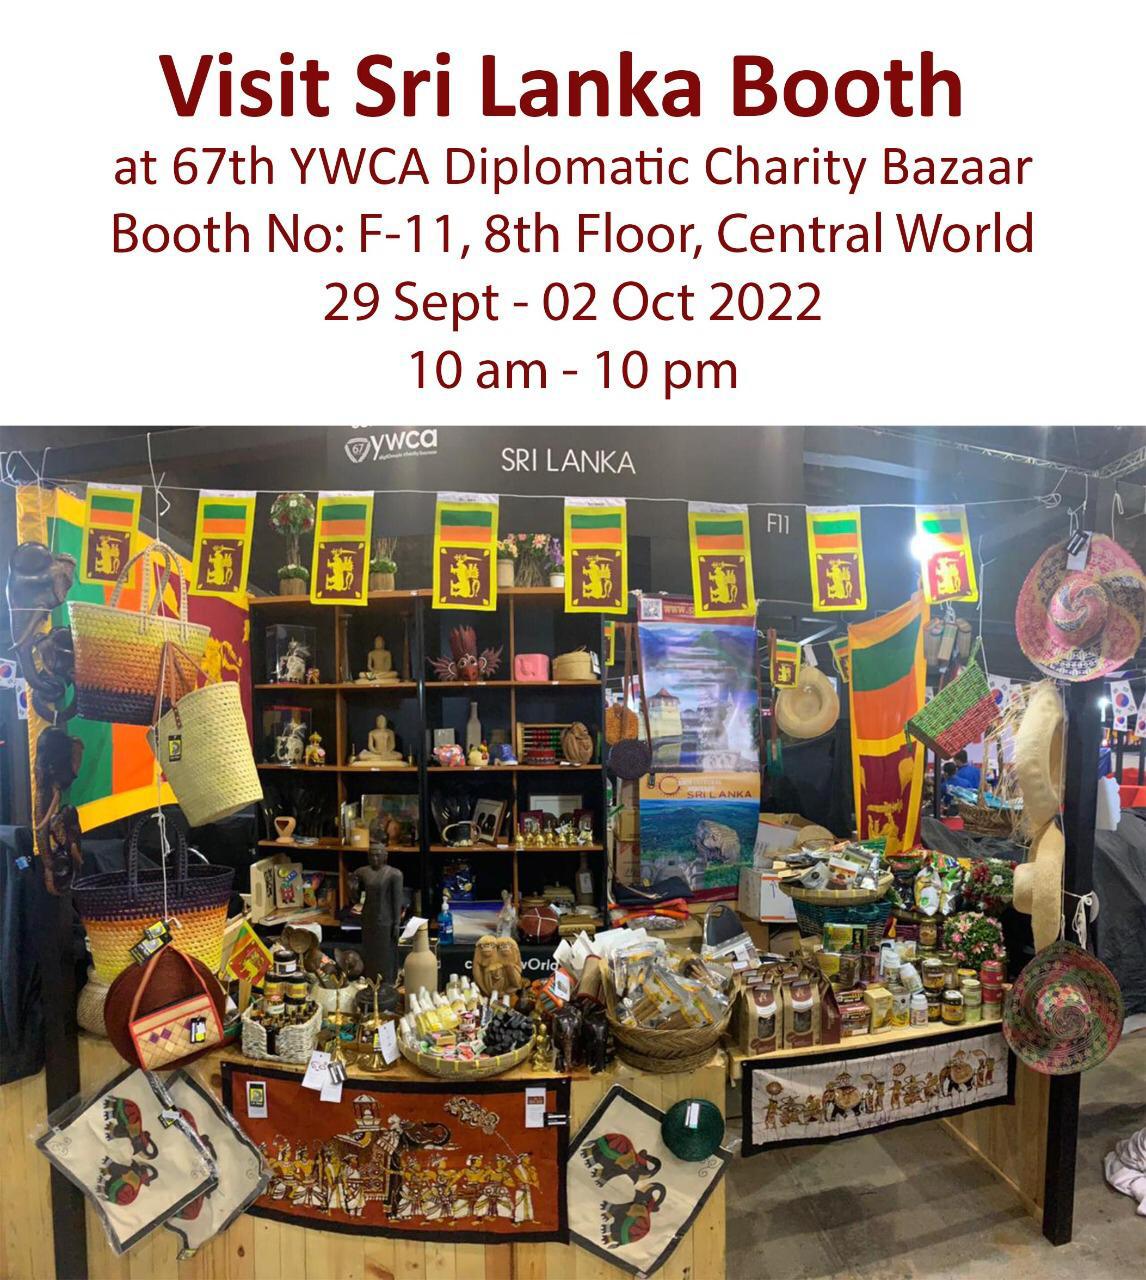 Visit Sri Lanka Booth at 67th YWCA Diplomatic Charity Bazaar